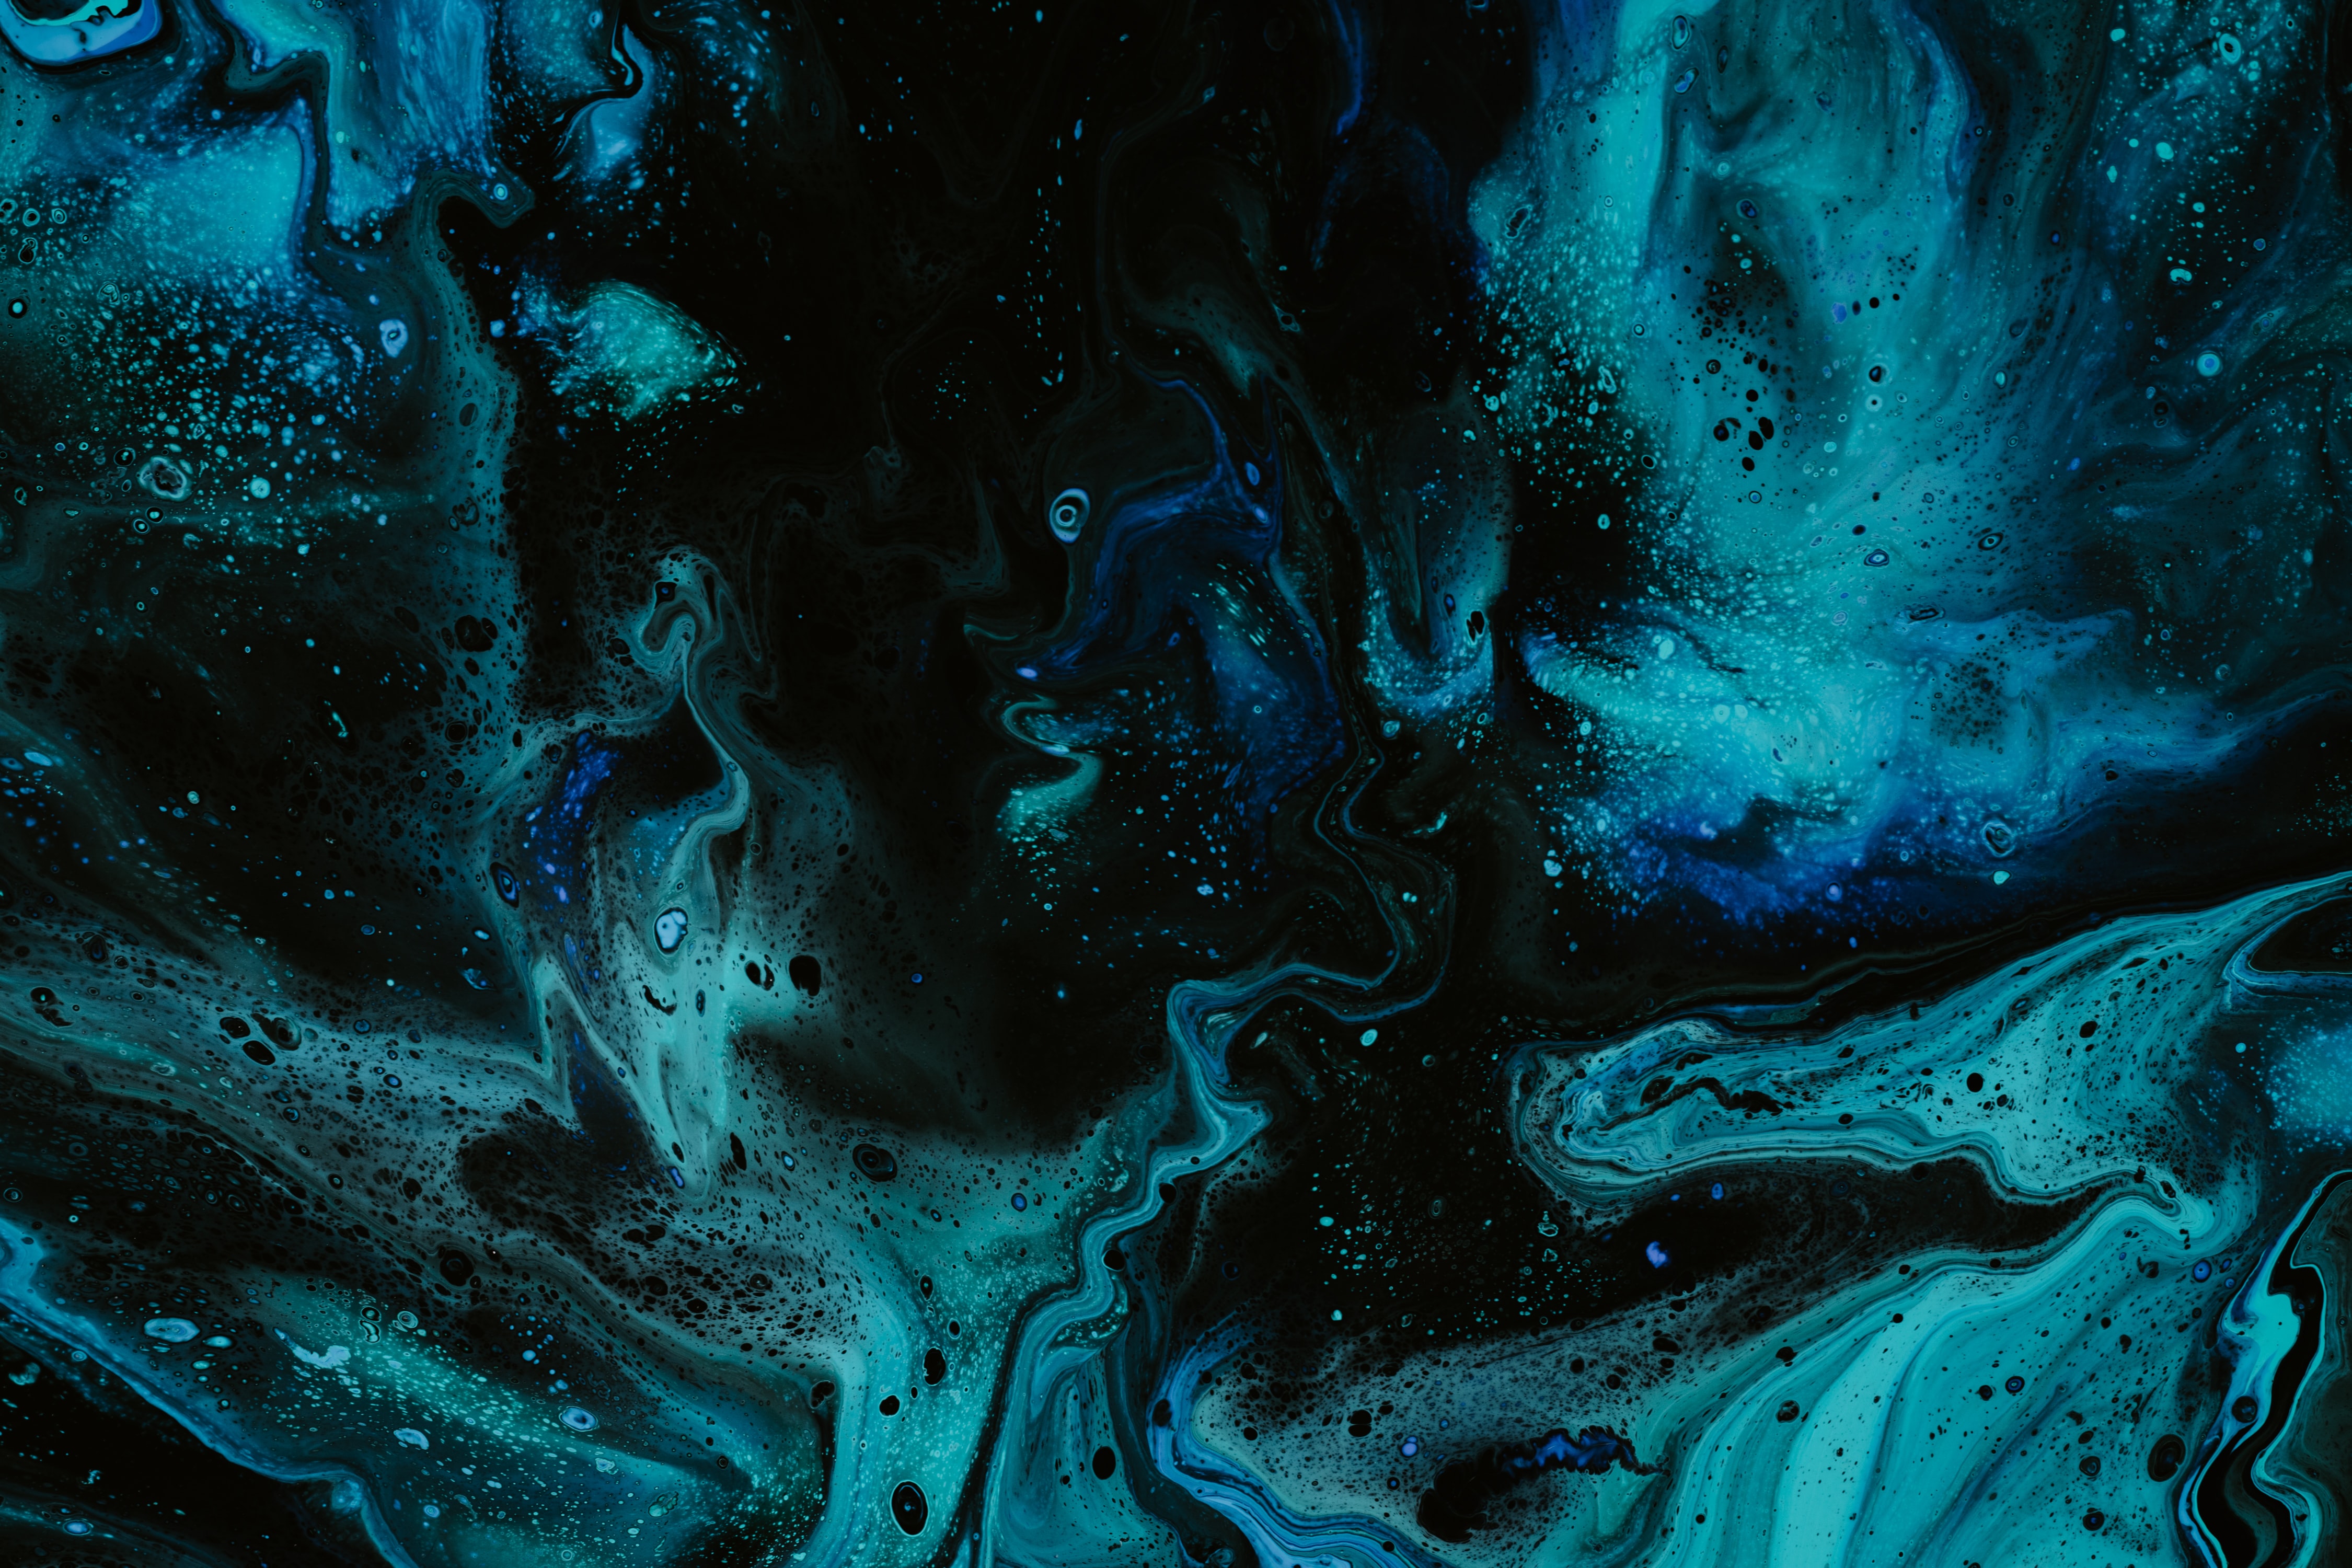 liquid, fluid art, blue, divorces, abstract, paint wallpaper for mobile